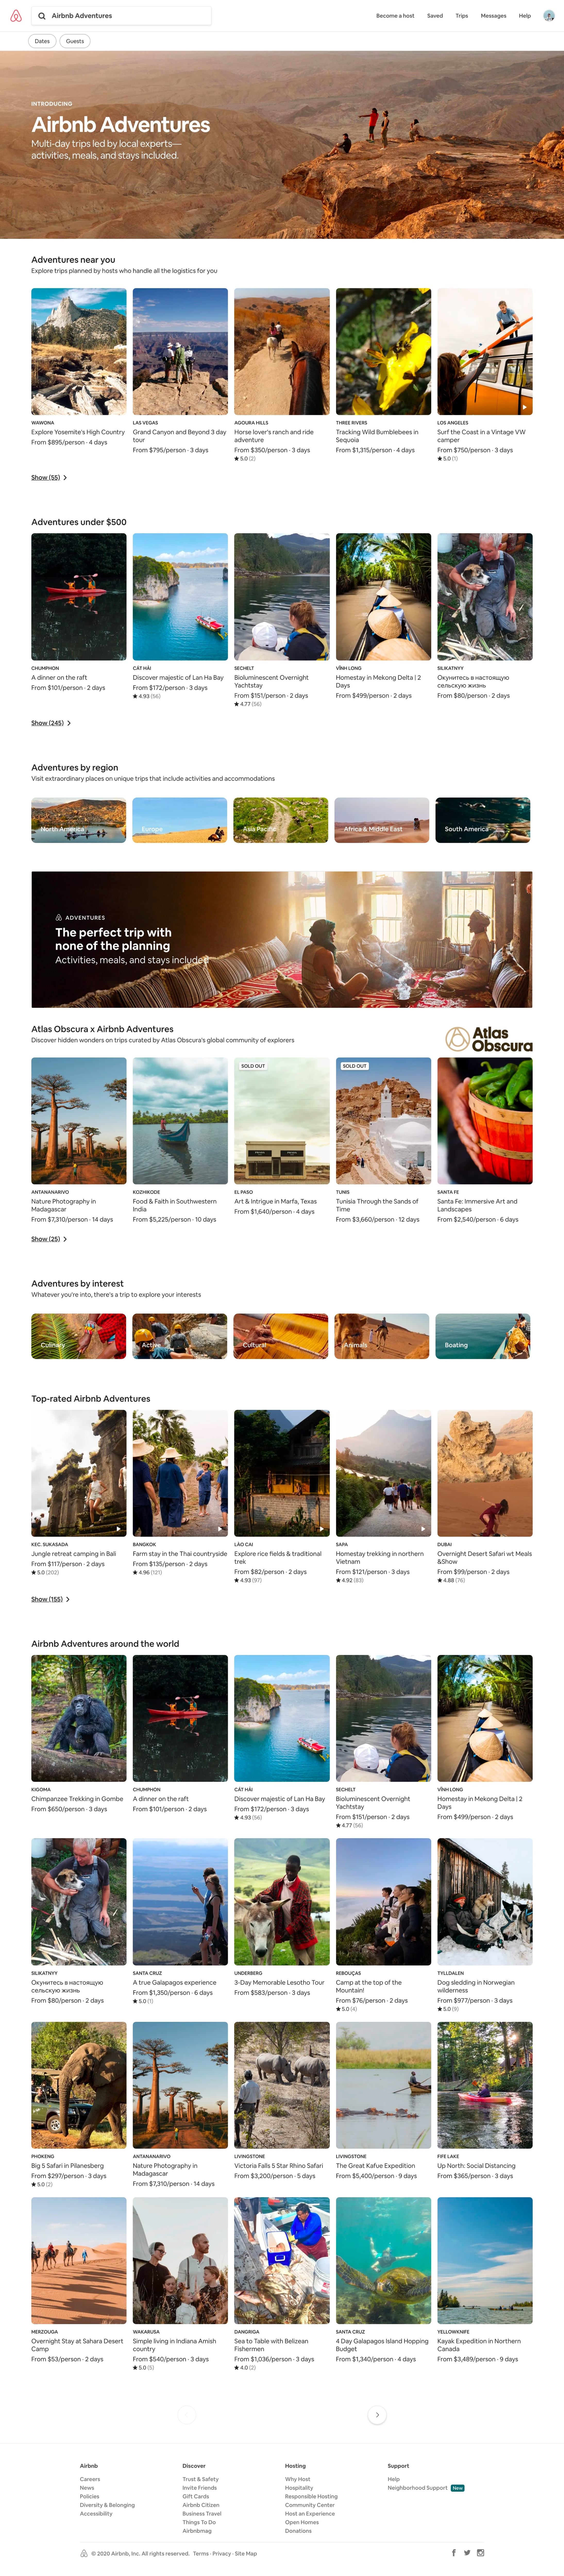 airbnb adventures page design